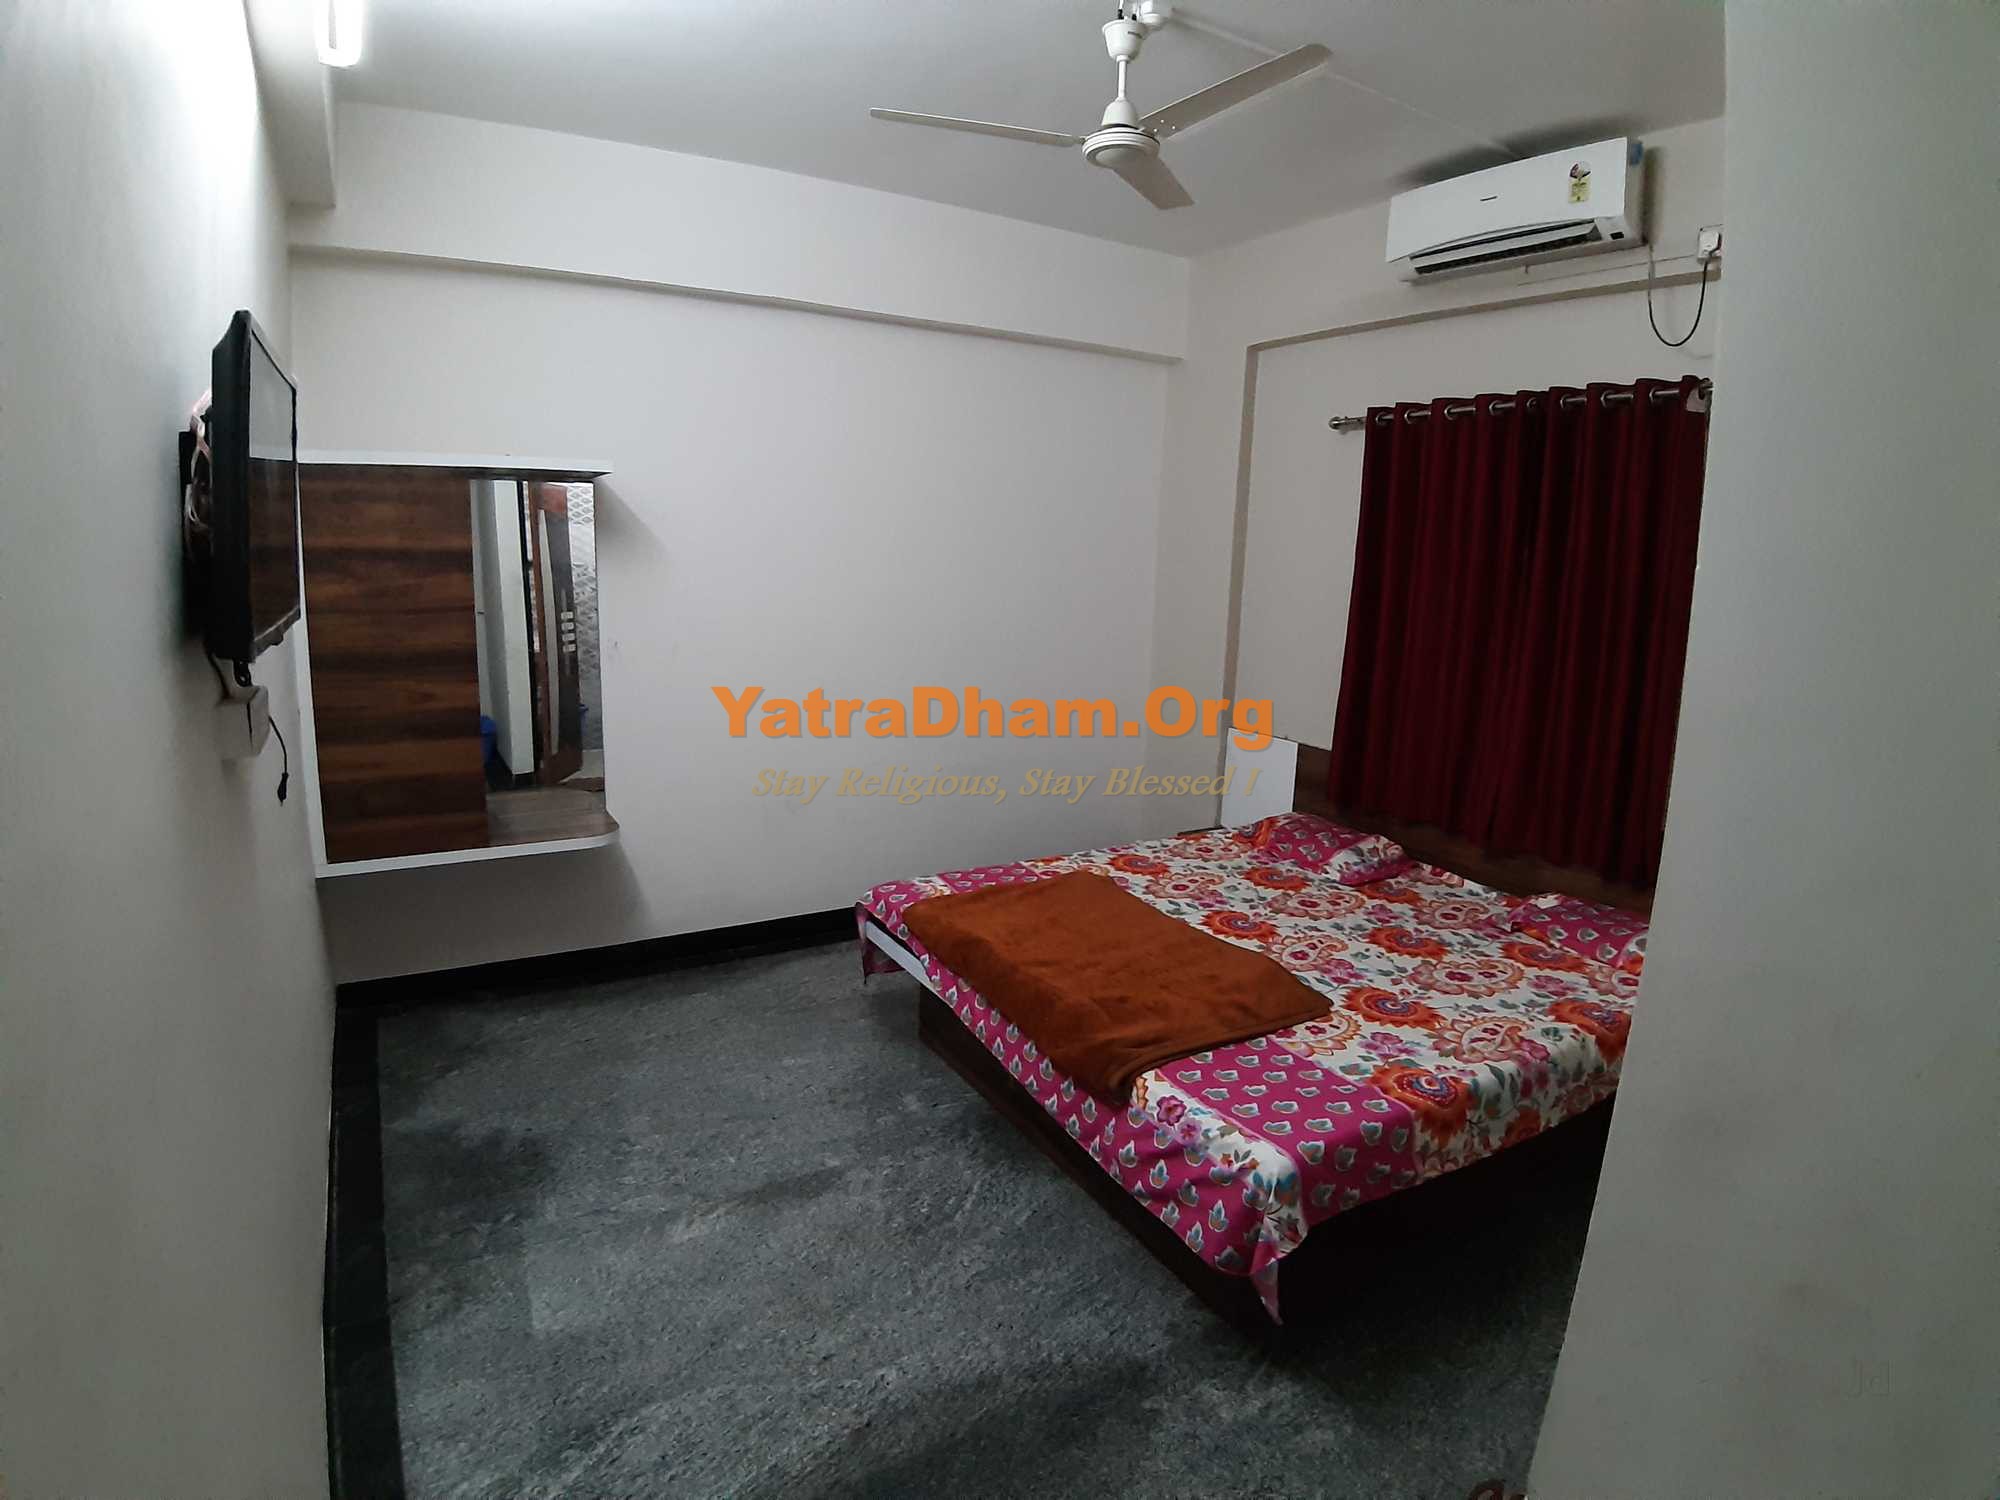 Shingnapur - YD Stay 18401 (Hotel Mamta and Lodging)